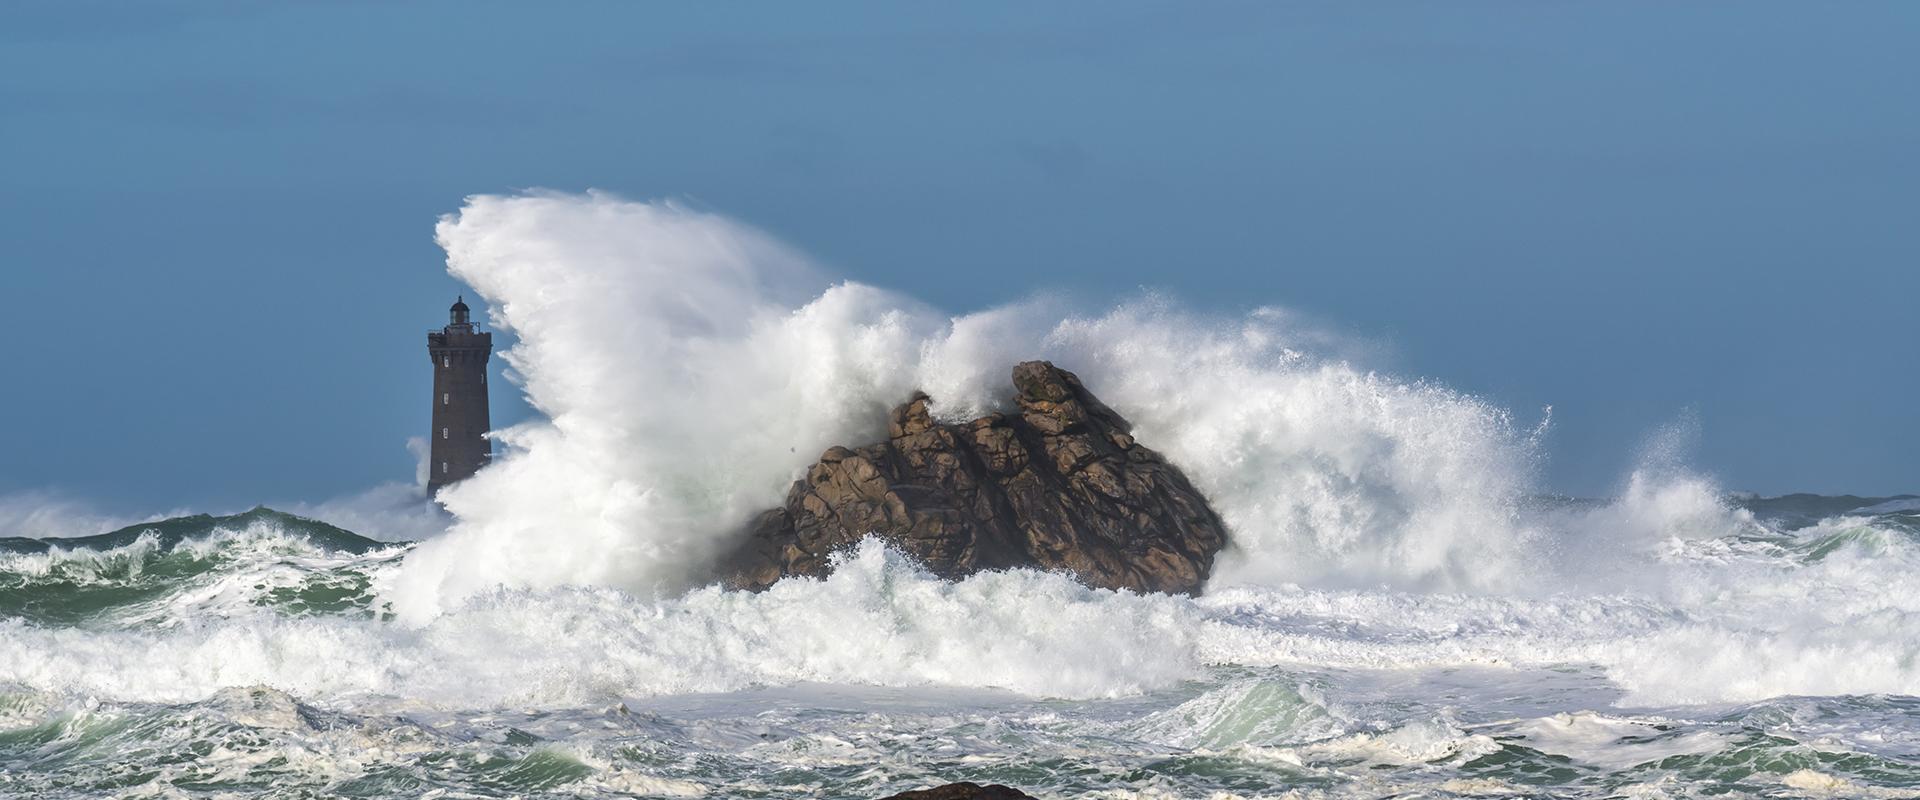 Tempête en mer d'Iroise, Bretagne